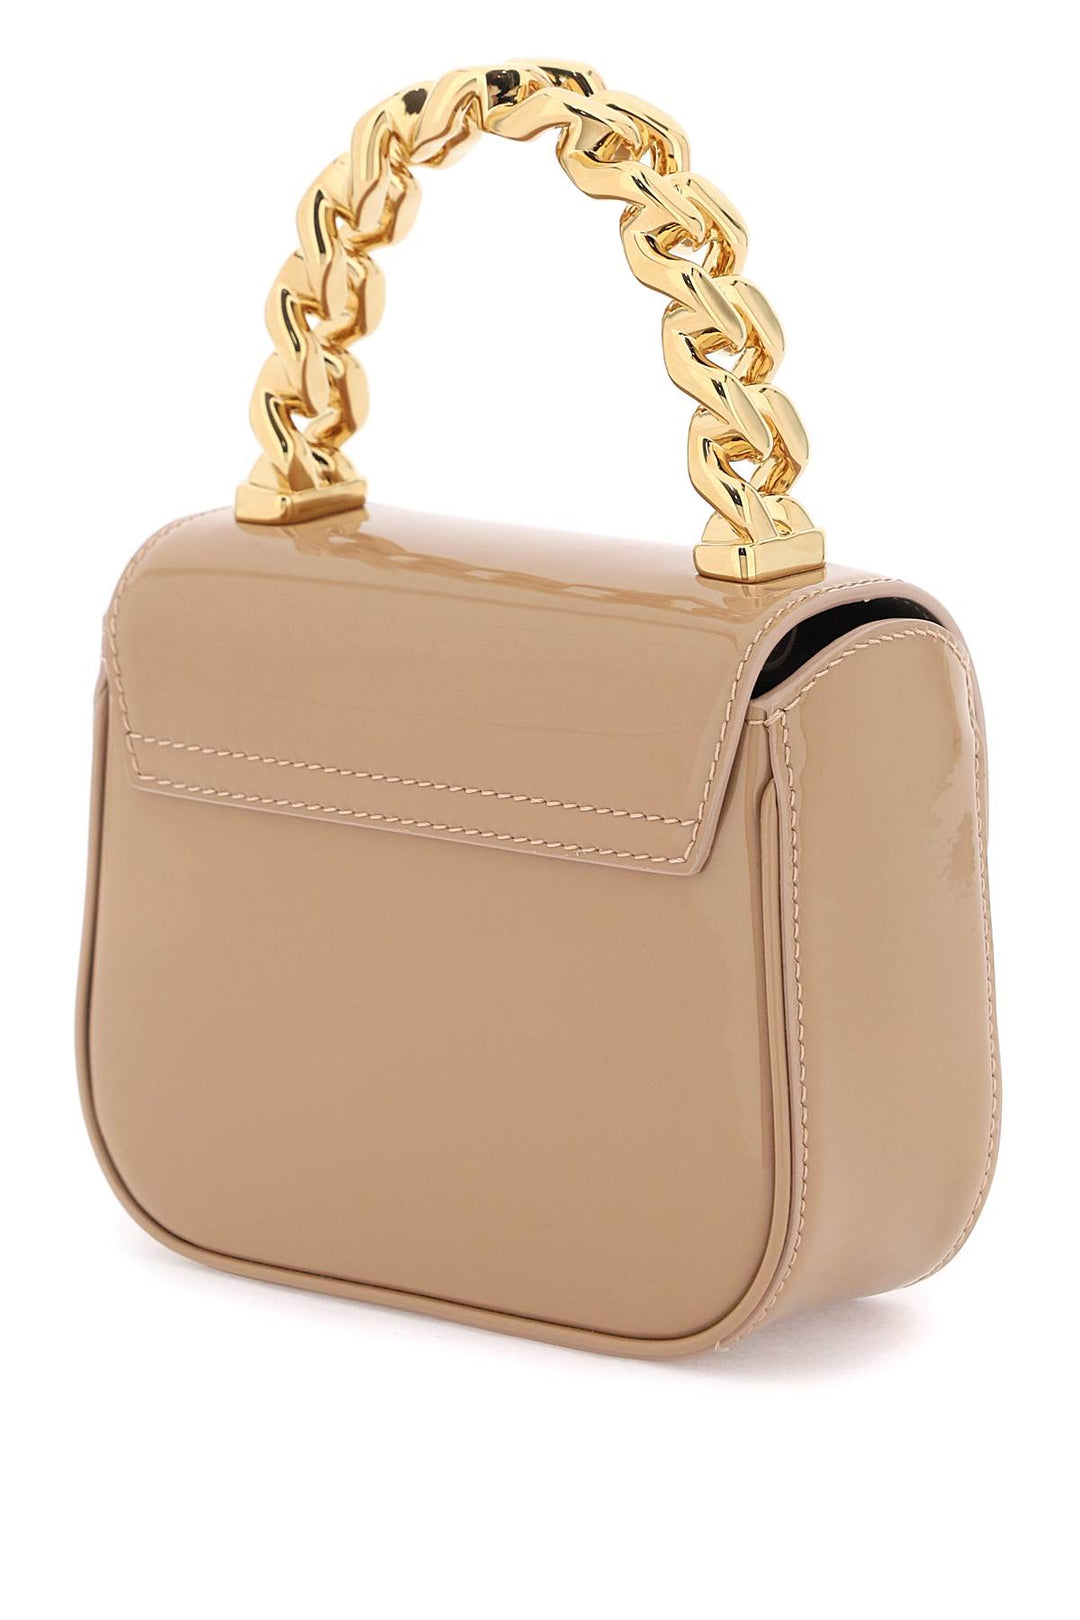 Versace Patent Leather 'La Medusa' Mini Bag   Beige